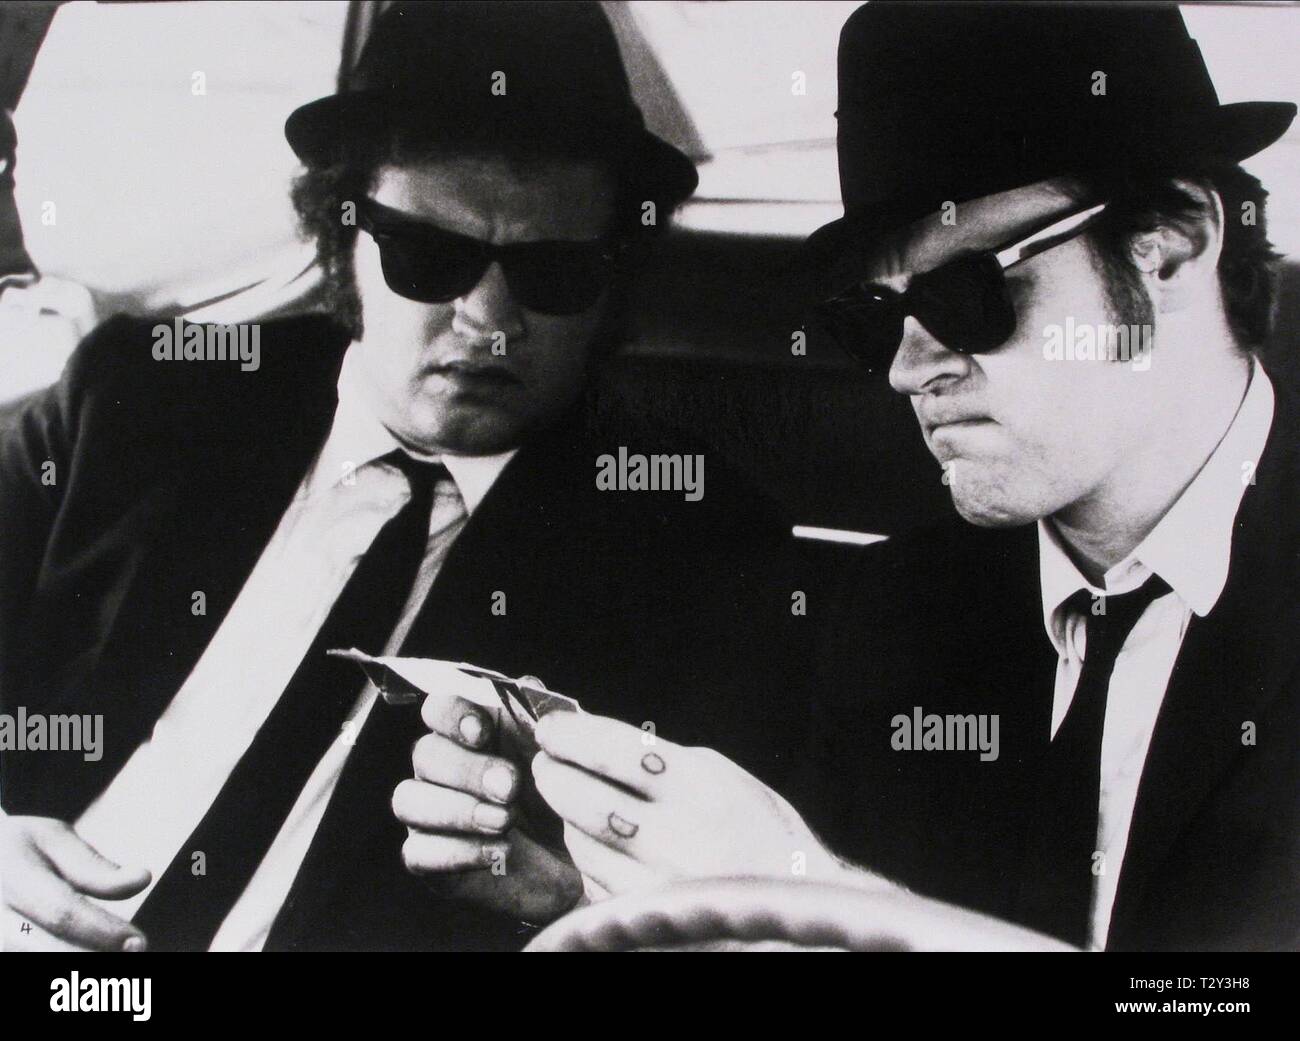 Blues Brothers, (THE BLUES BROTHERS) USA 1979, Regie: John Landis, DAN  AYKROYD, JOHN BELUSHI, Schlüssel: Sonnenbrille, Tanzen, Tänzer  Stockfotografie - Alamy